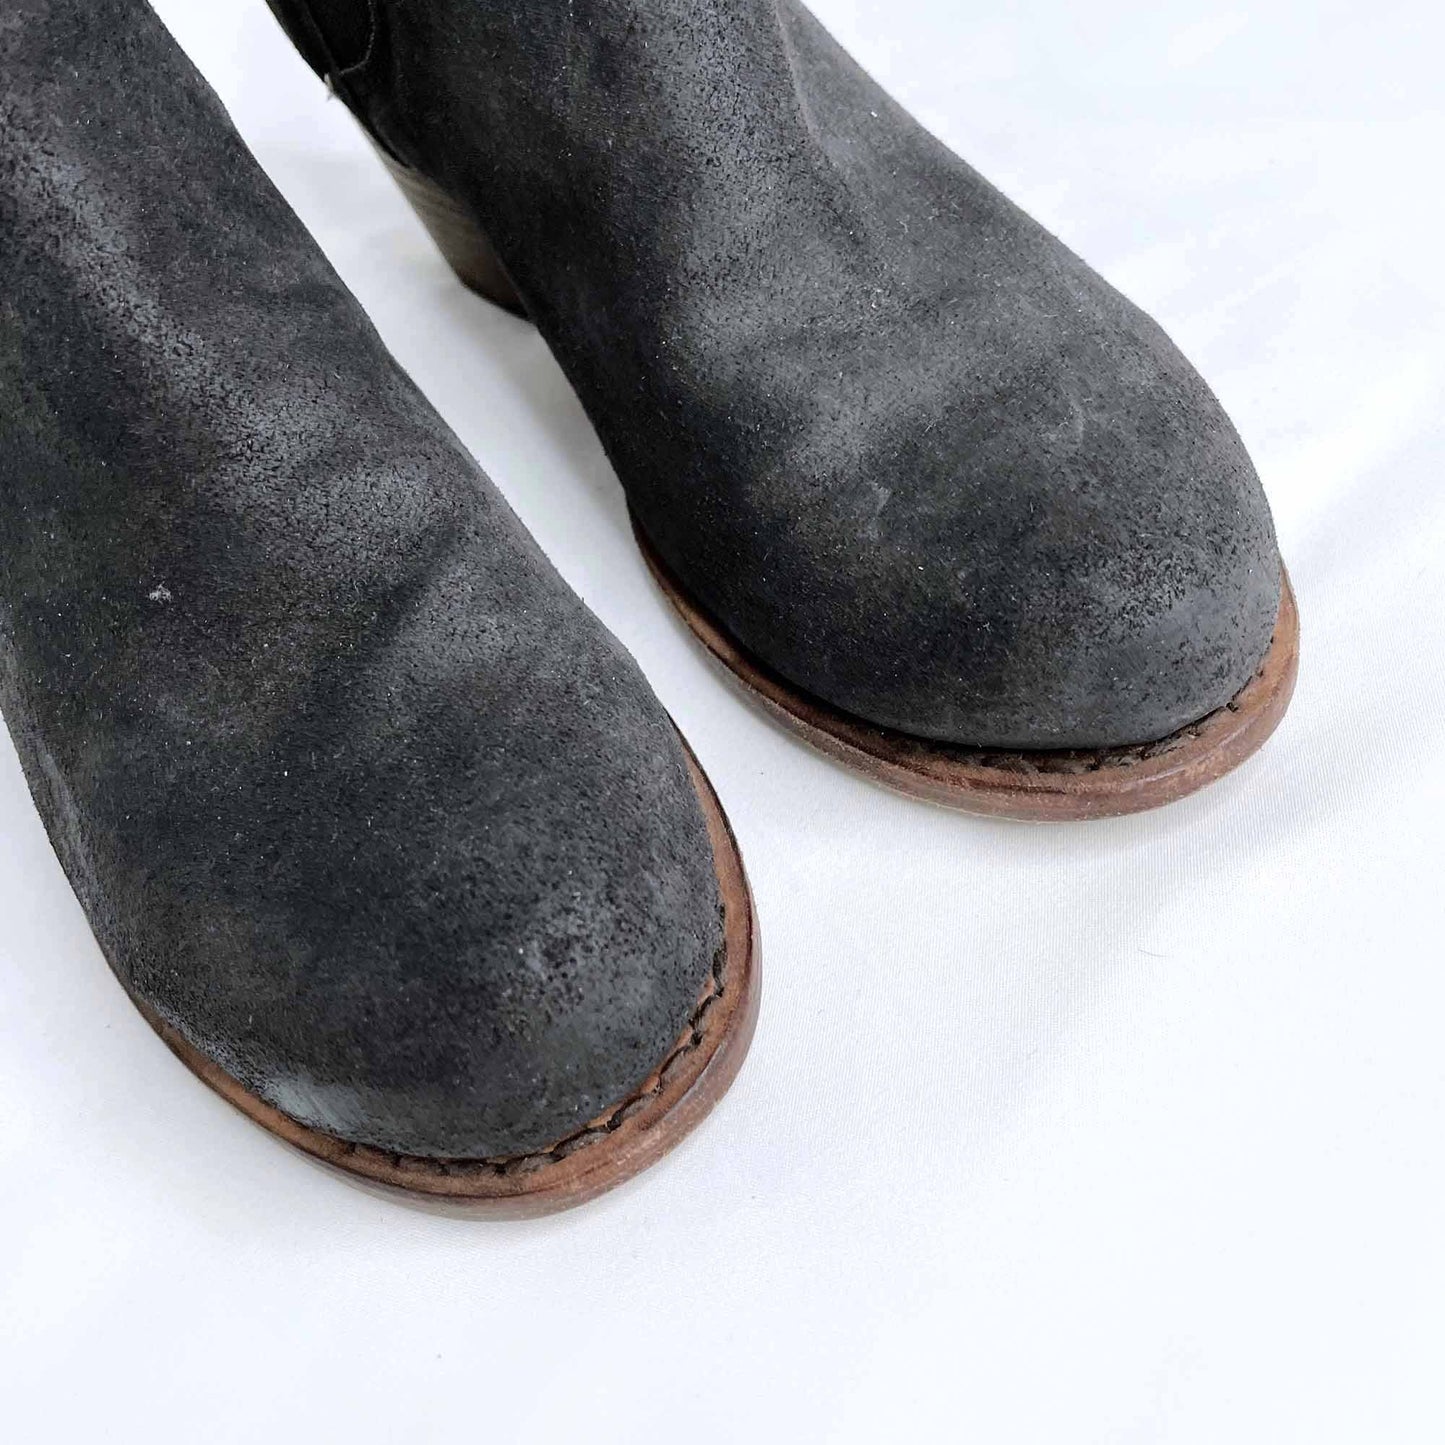 rag & bone durham brushed leather harness boot - size 38